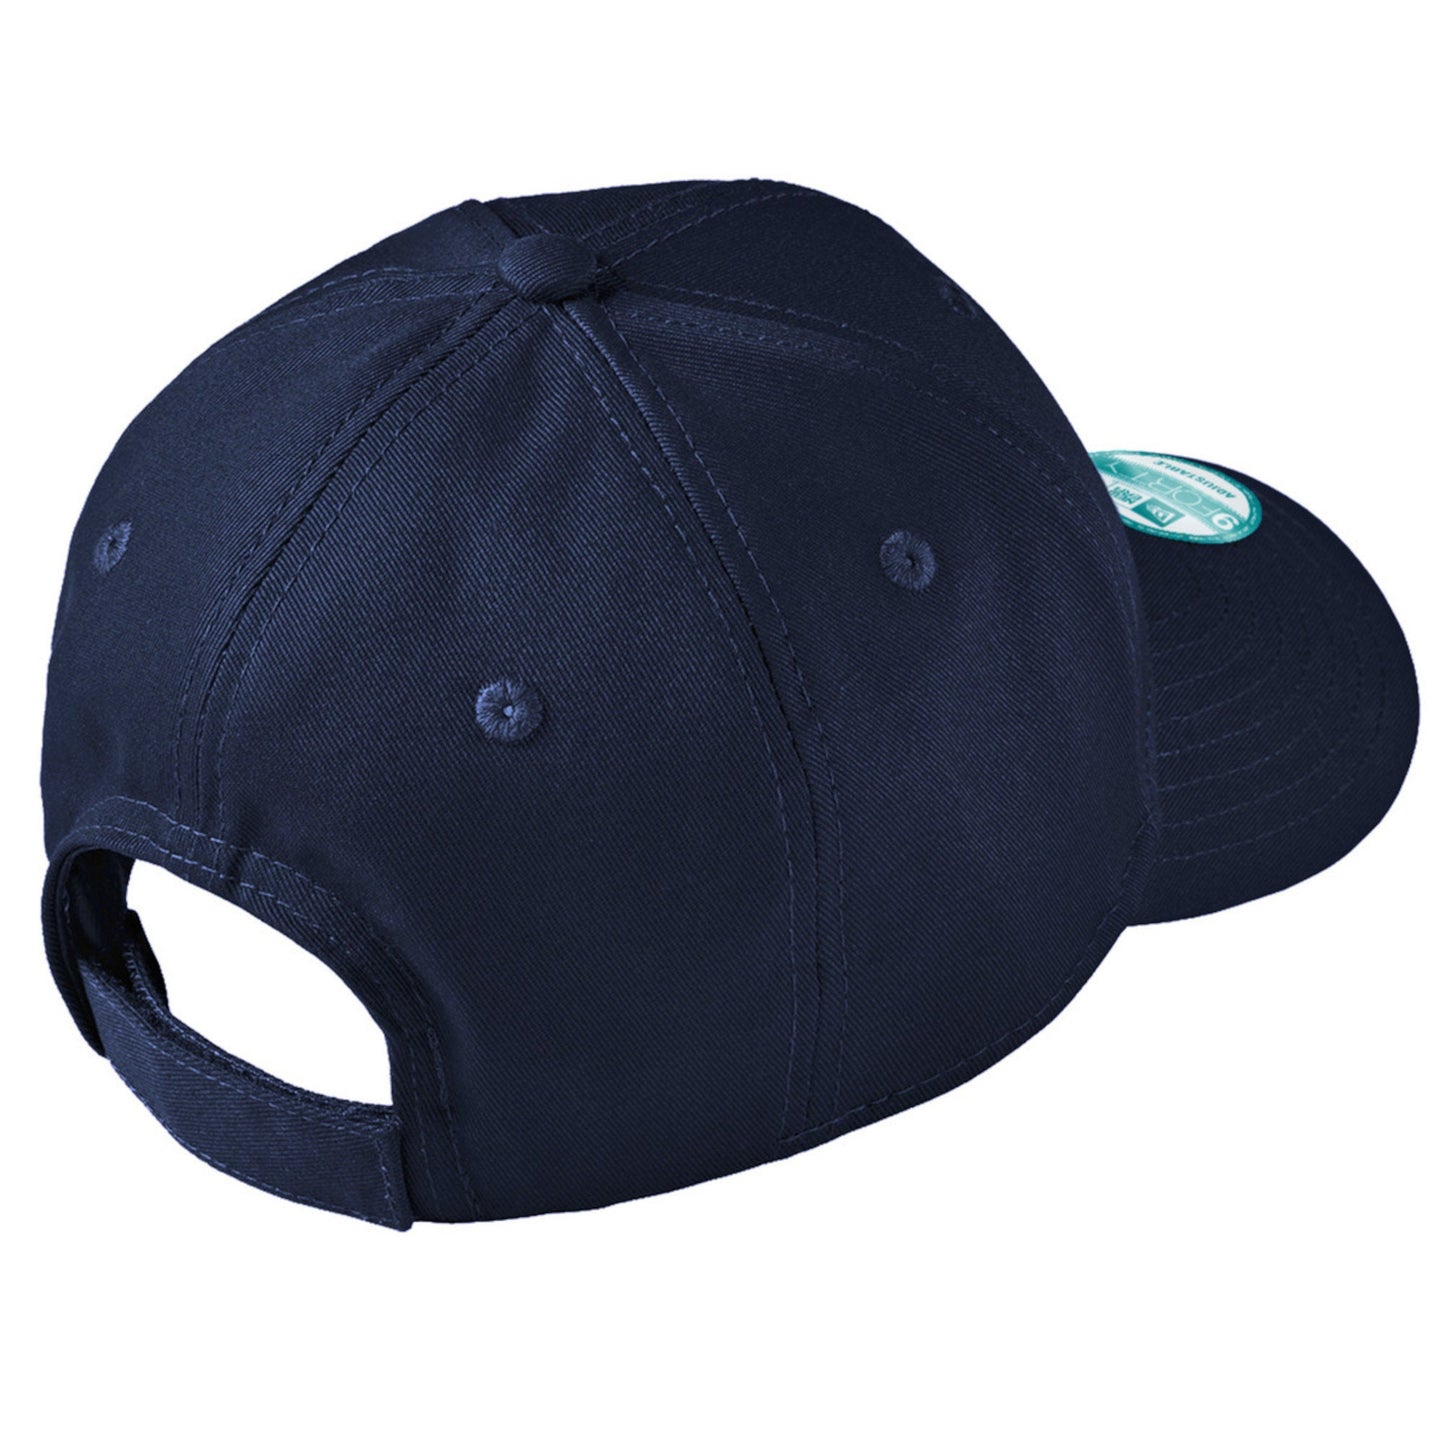 SPORTS! hat | Baseball Cap